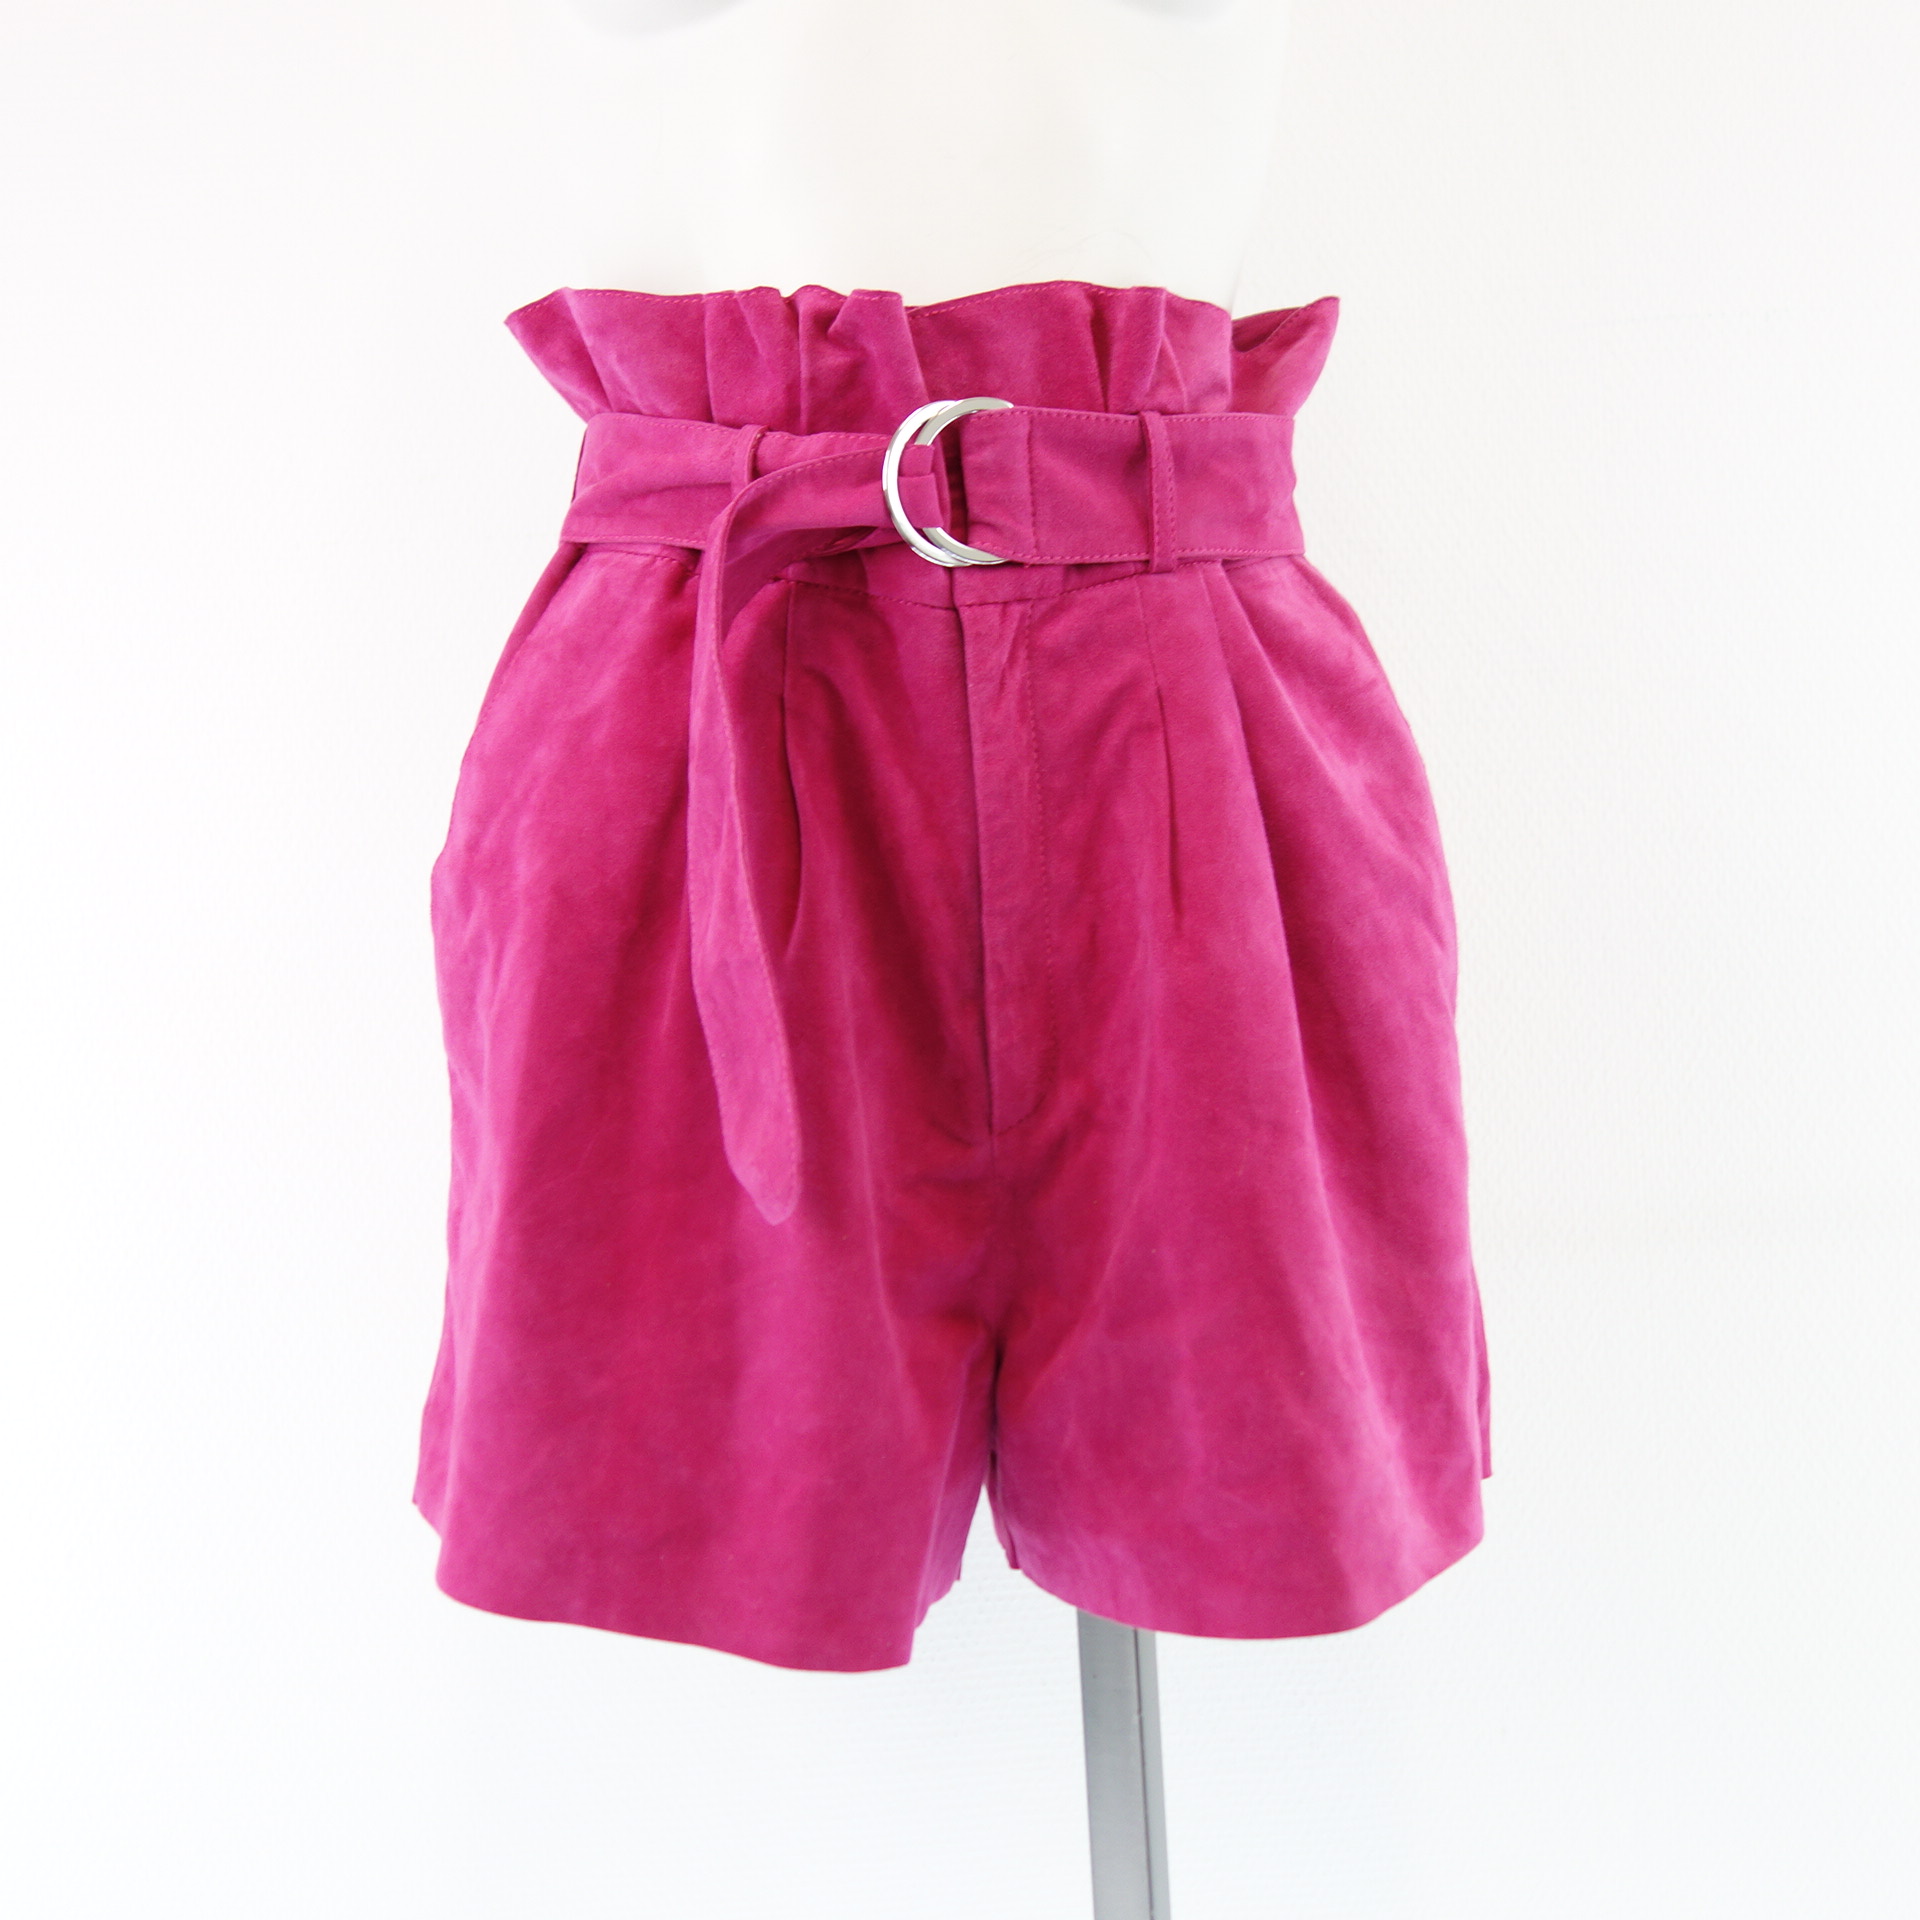 PAROSH P A R O S H Damen Kurze Hose Shorts Bermuda Leder Lederhose Pink Größe M 38 